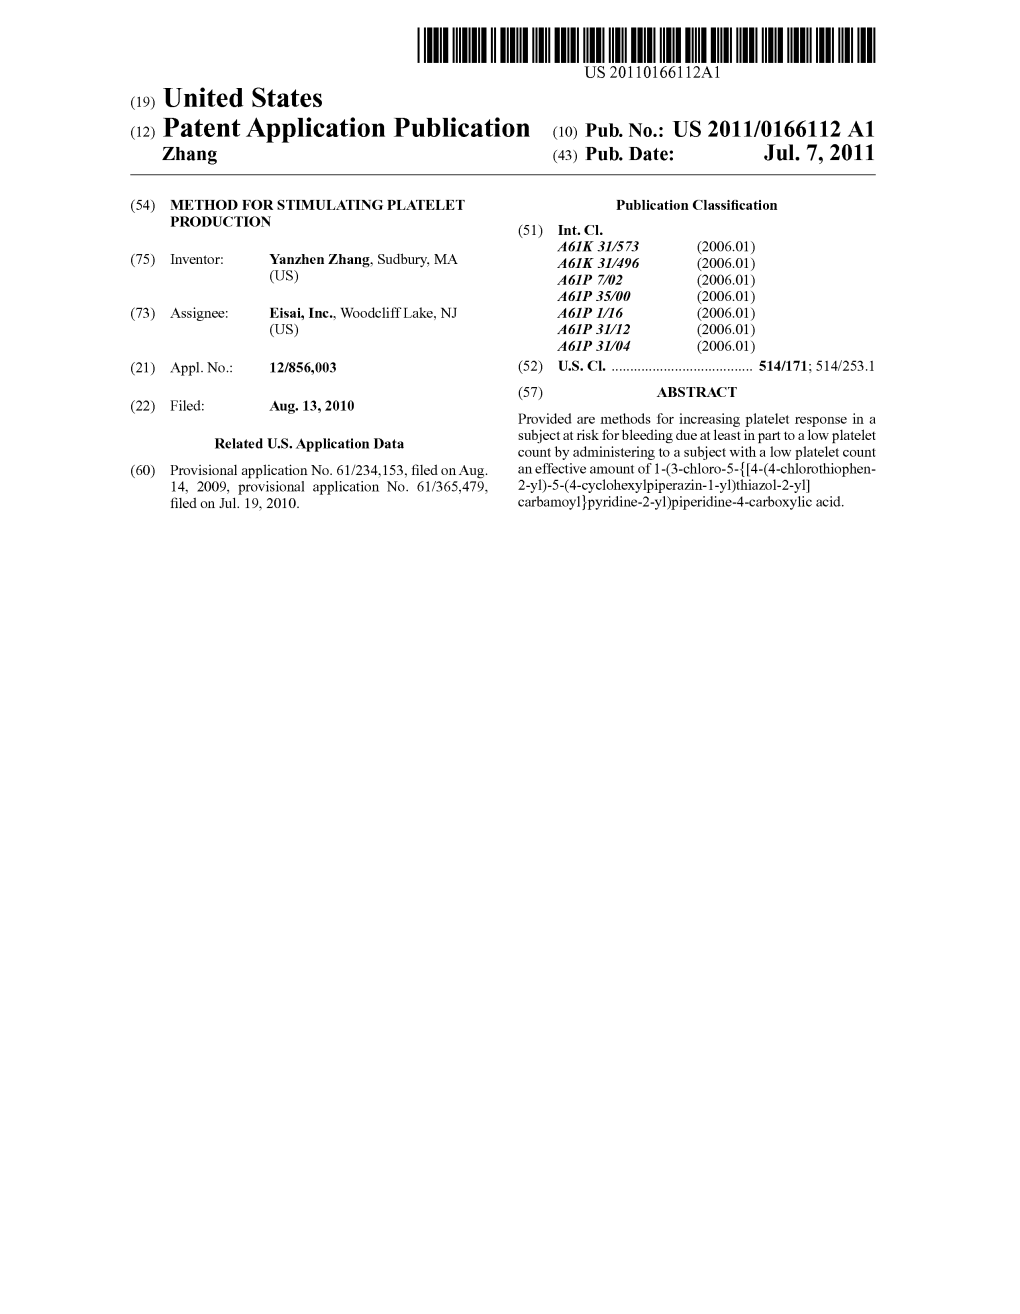 (12) Patent Application Publication (10) Pub. No.: US 2011/01661 12 A1 Zhang (43) Pub